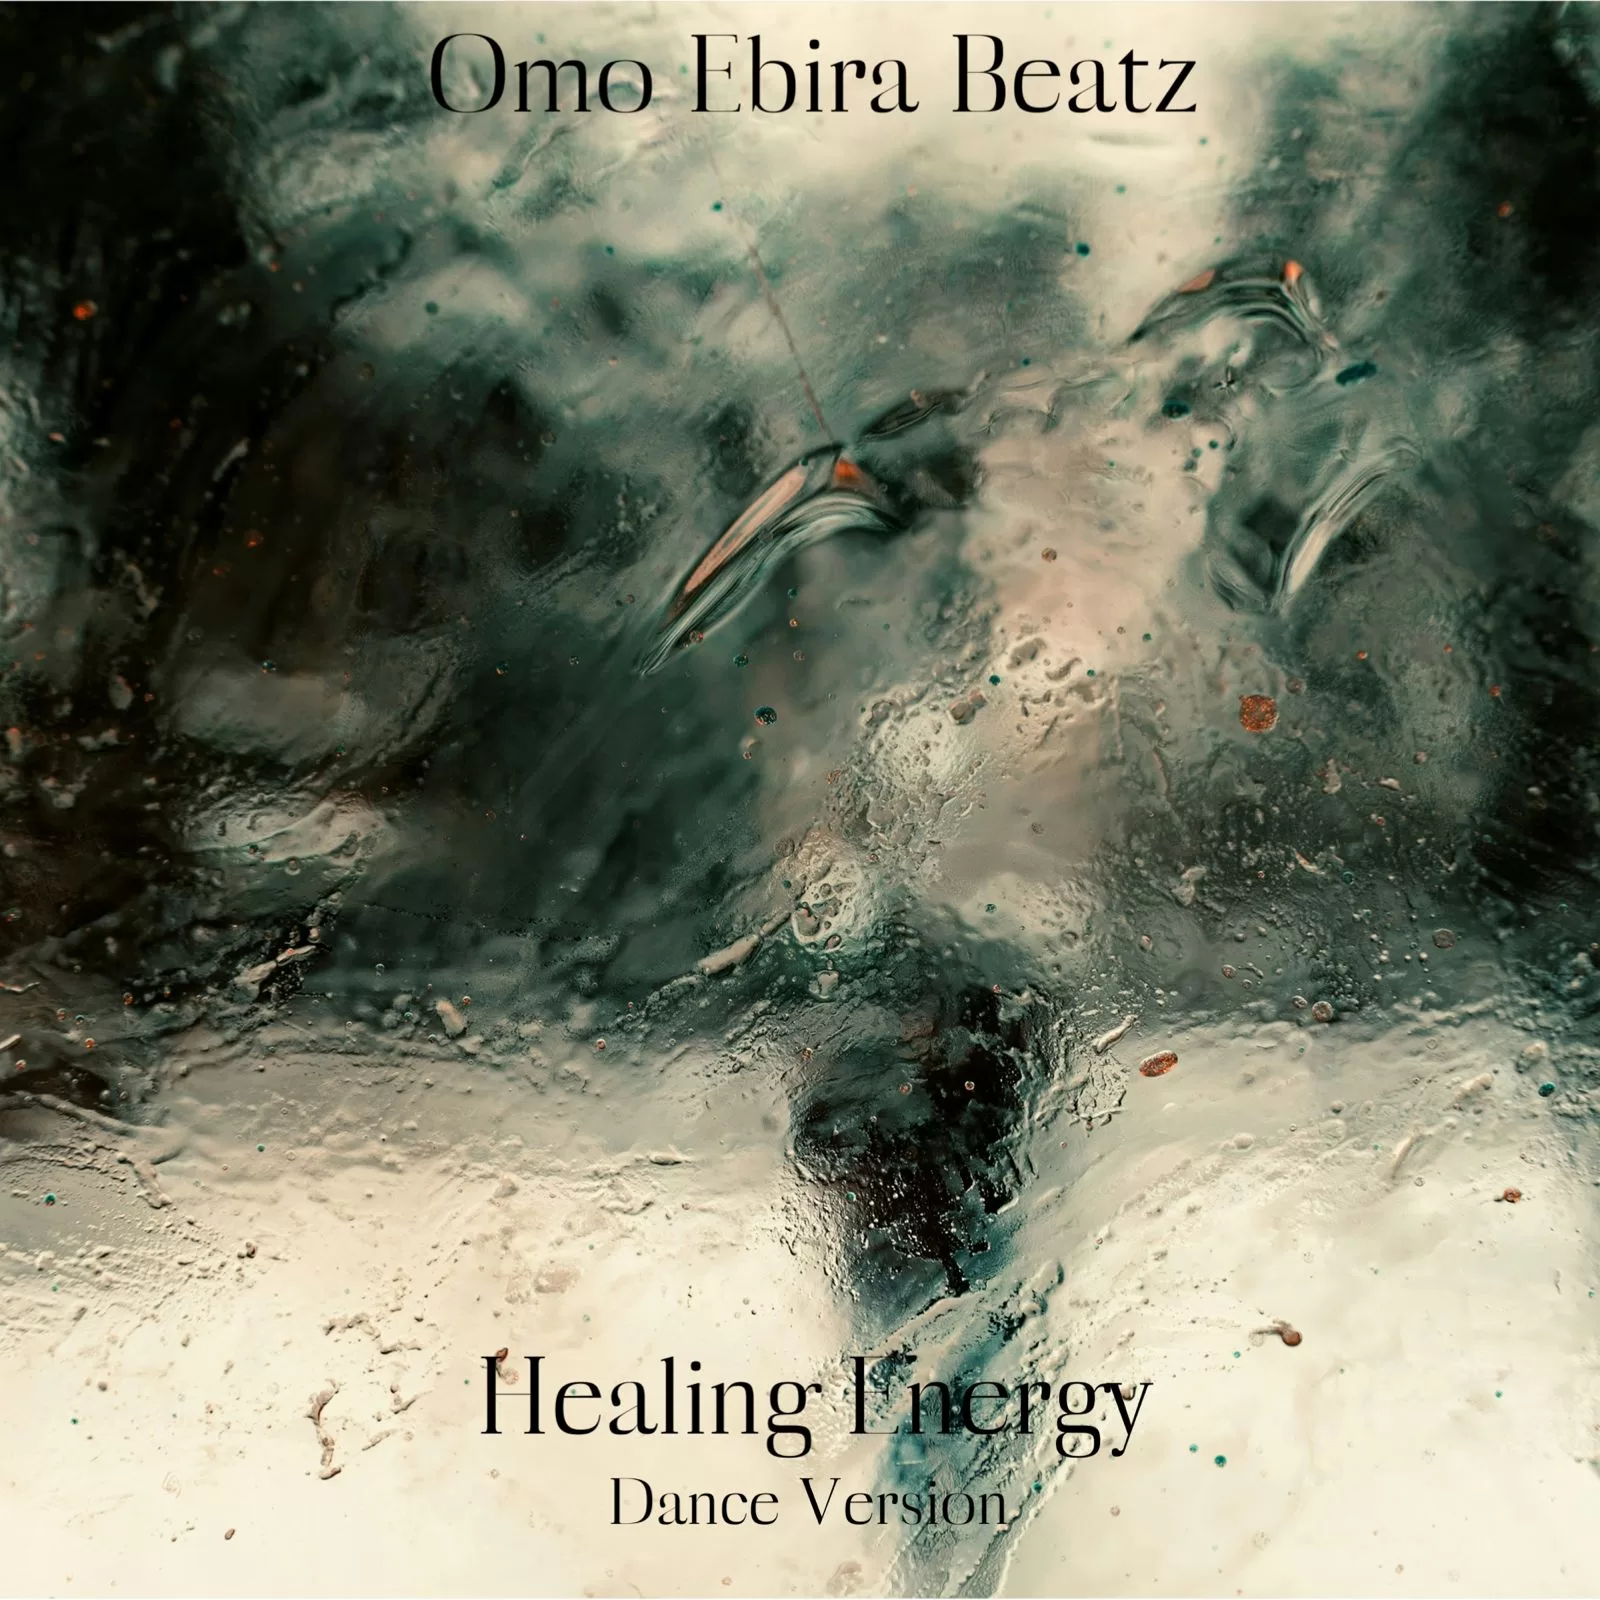 Omo Ebira Ft. Chris Brown - Healing Energy Dance Version Mp3 Download